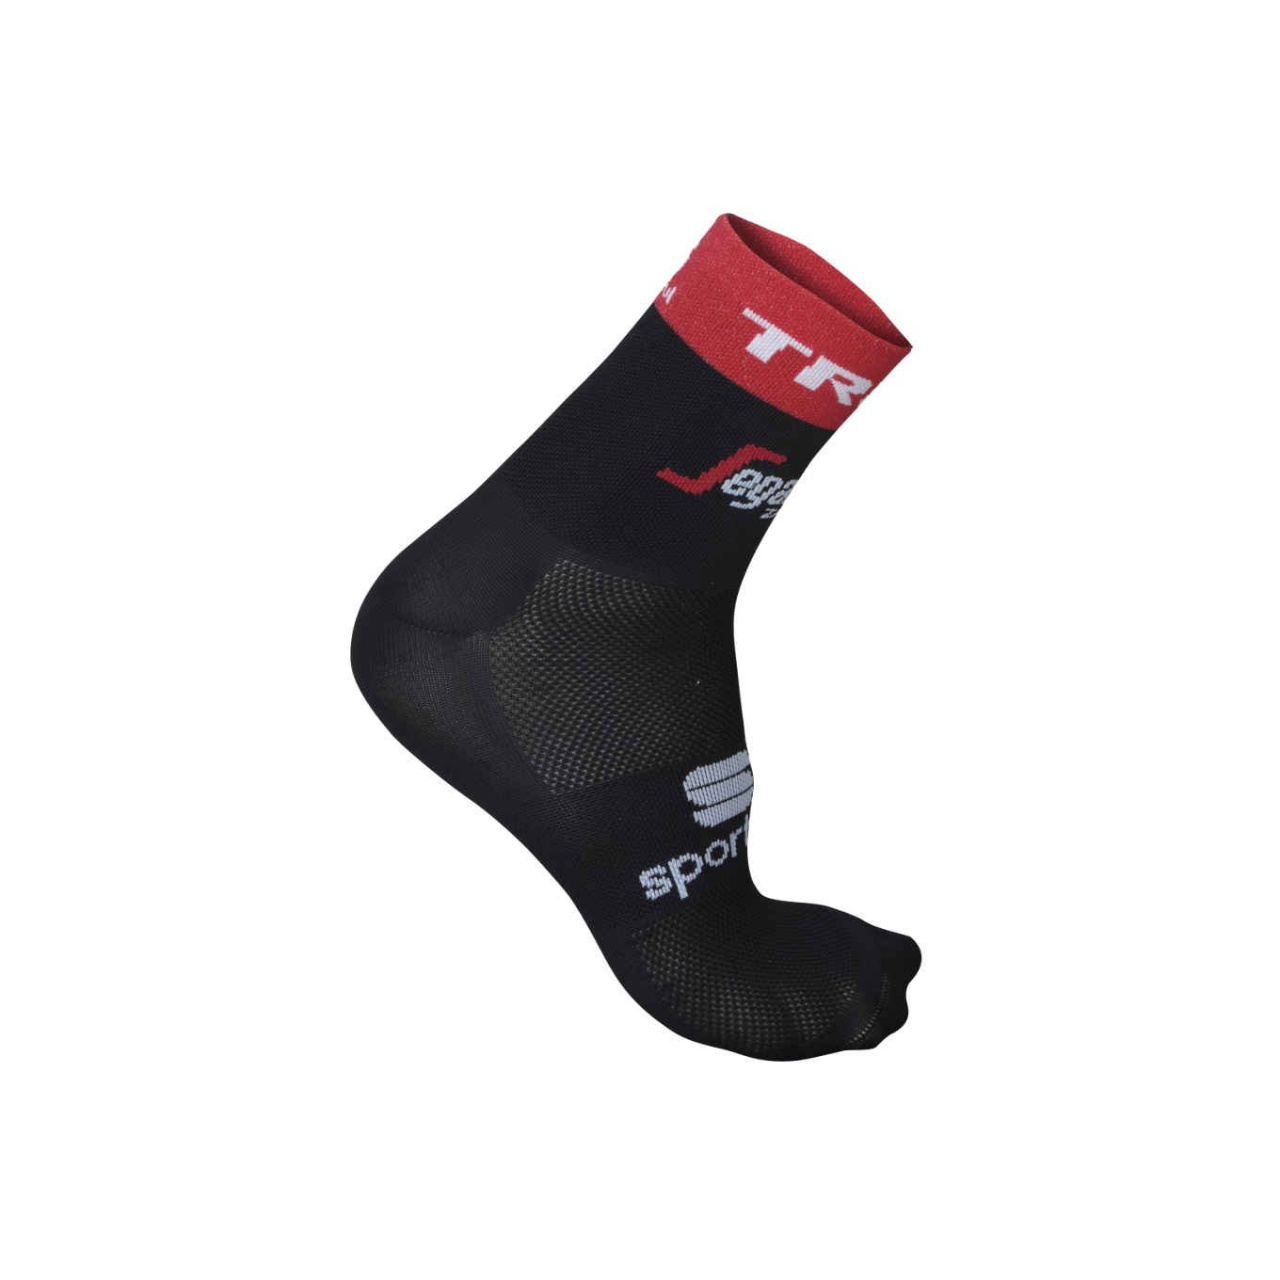 Bontrager Trek-Segafredo BodyFit Pro Race Sock 2017